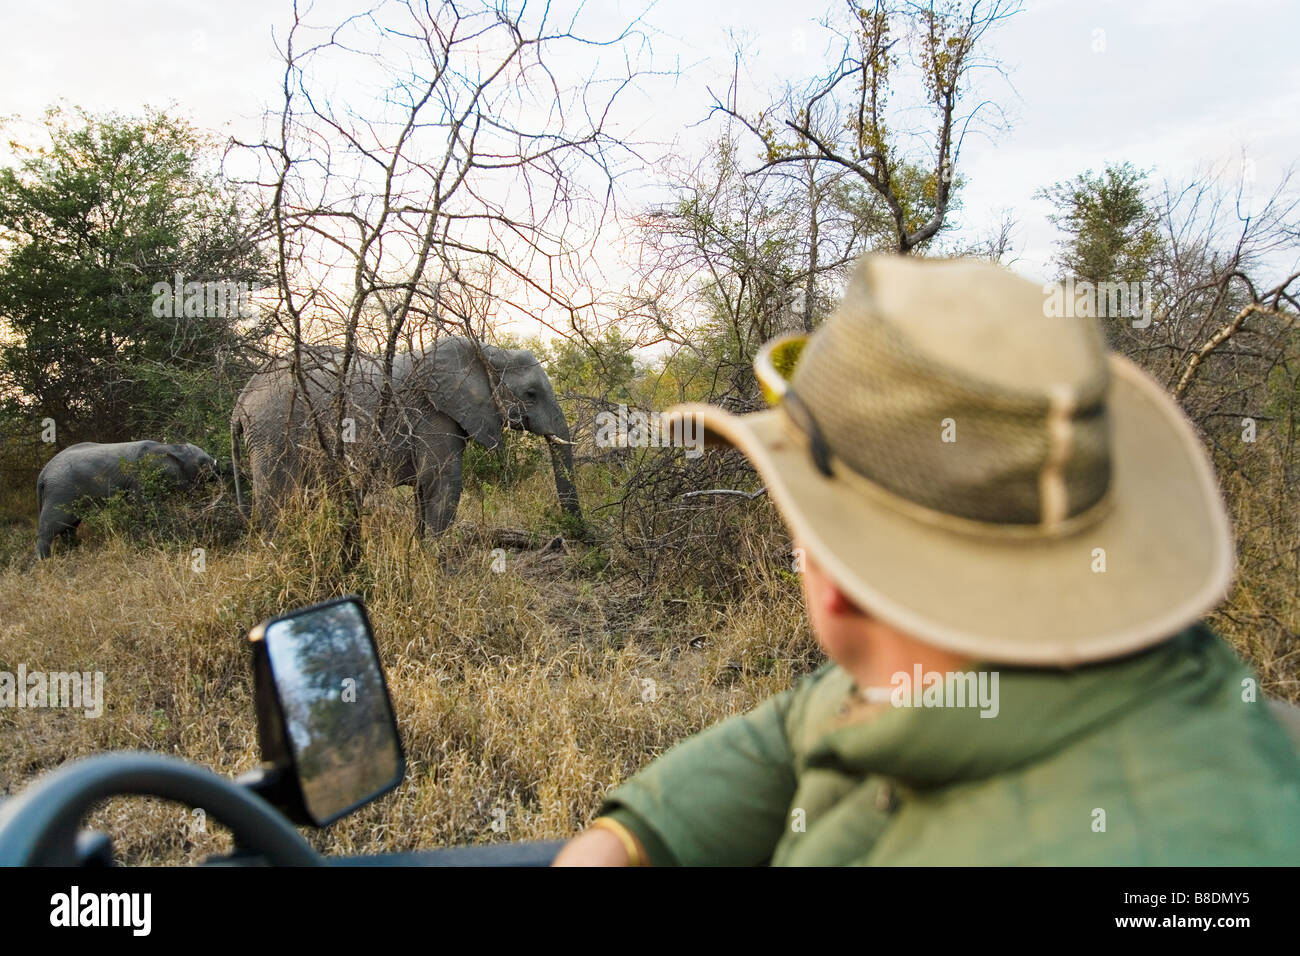 Man looking at elephants Stock Photo